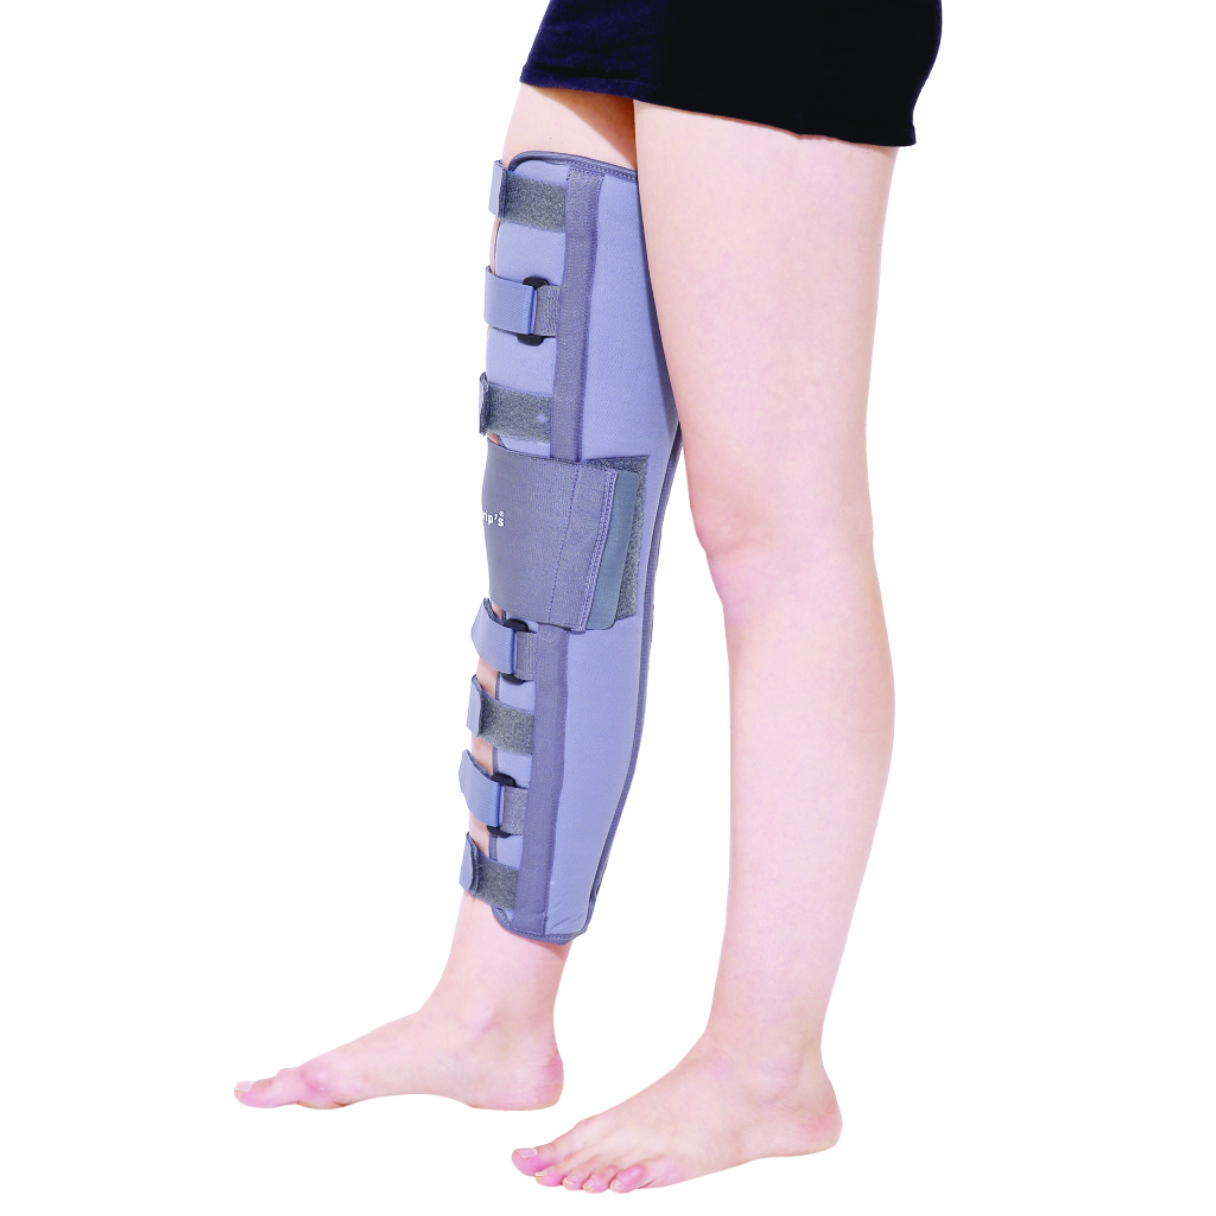 Knee Brace (Knee Immobilizer) – Short 24″